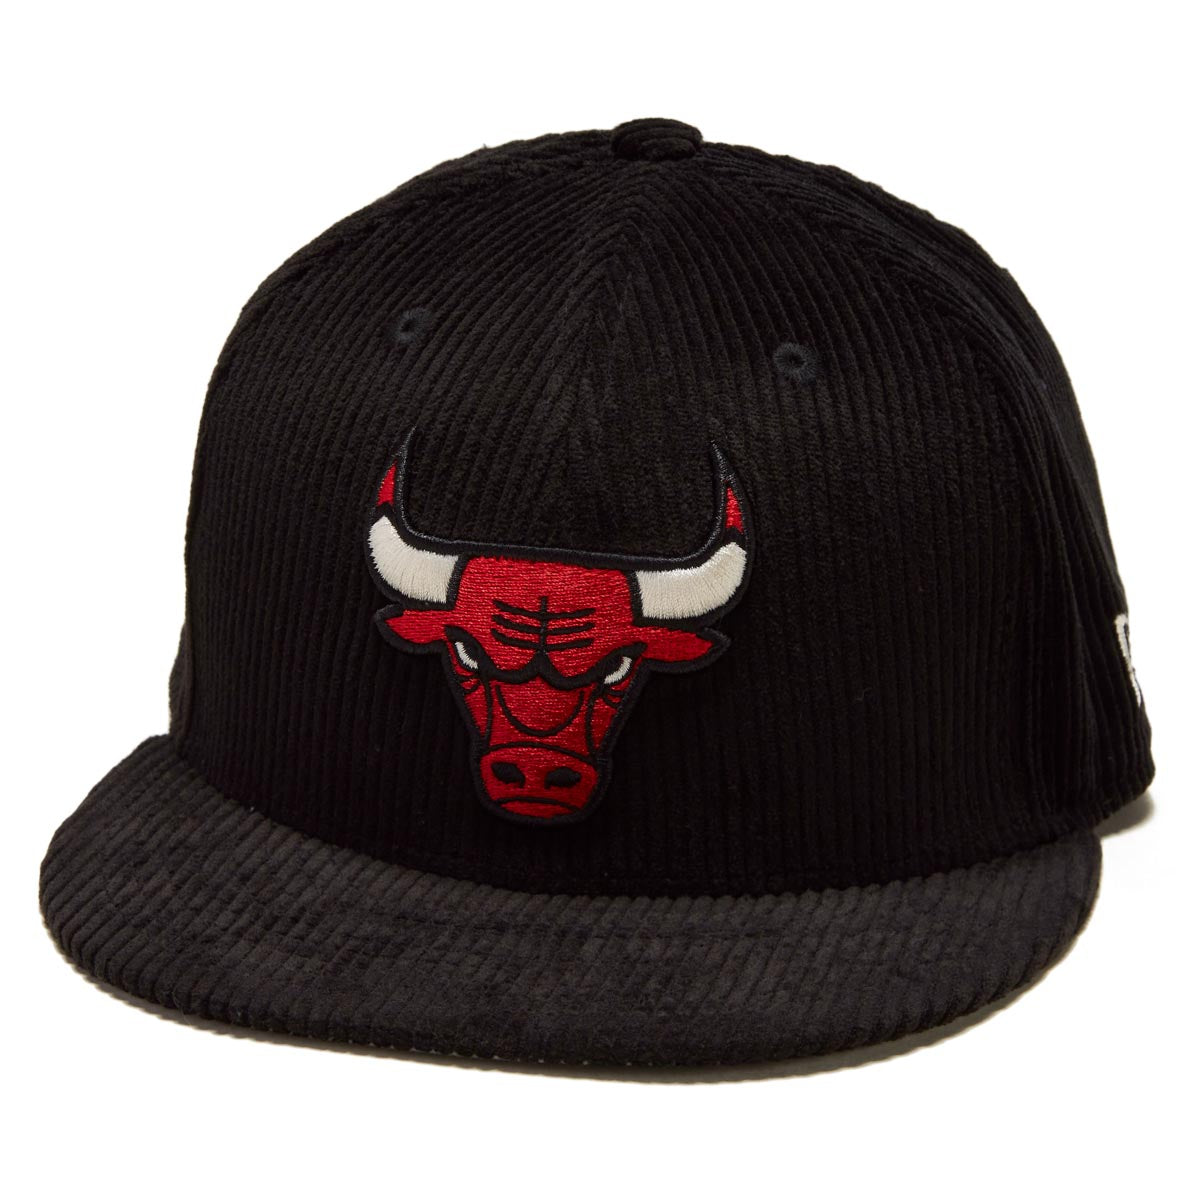 New Era 5950 Chicago Bulls Black/Burgundy Logo Fitted Hat Men Size